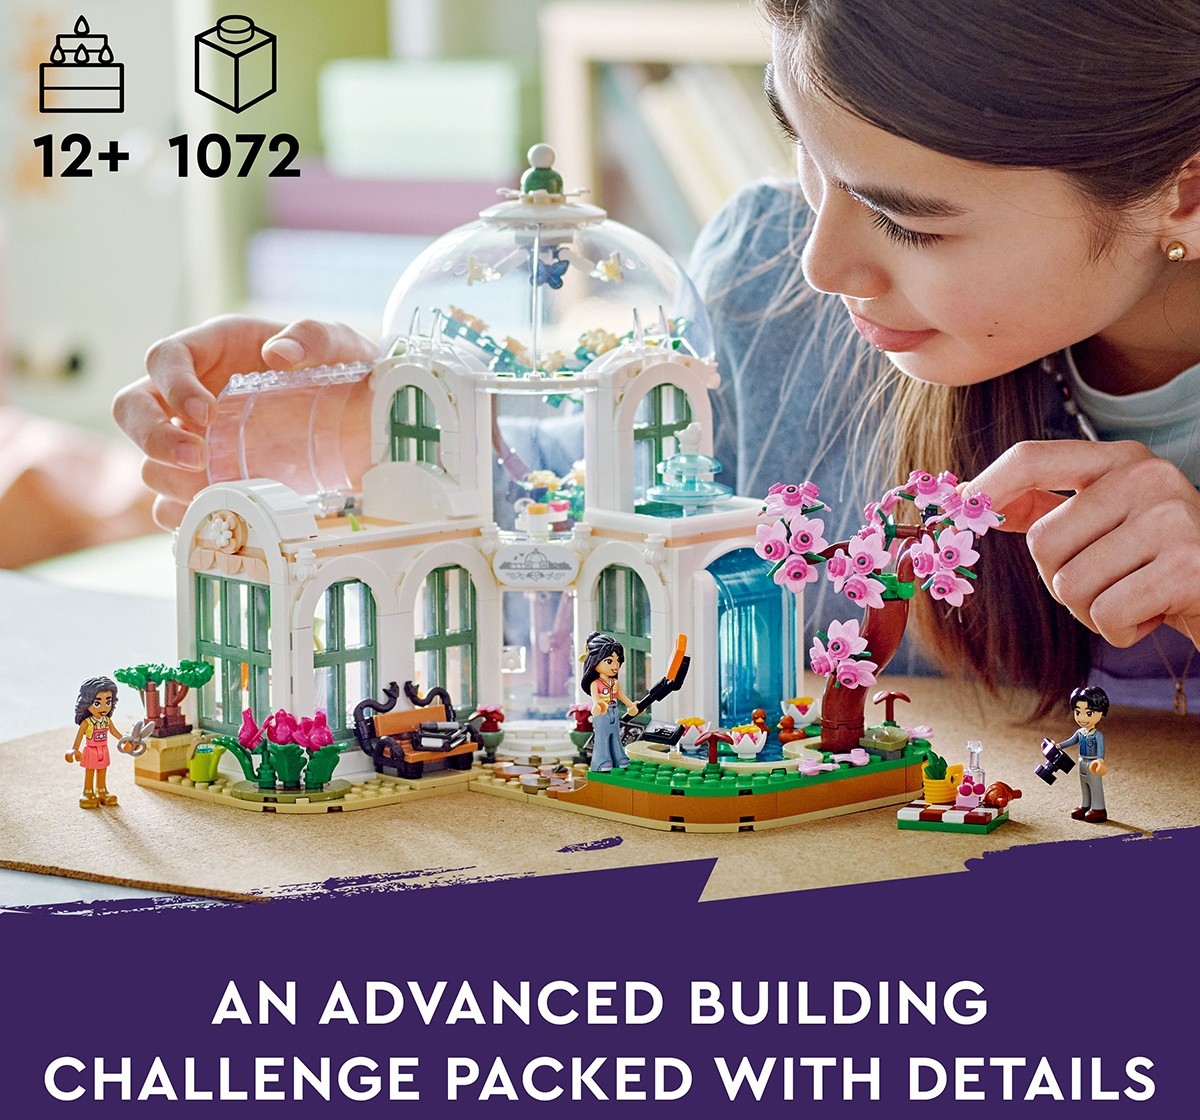 Lego Friends Botanical Garden 41757 Building Toy Set (1,072 Pieces), 12Y+